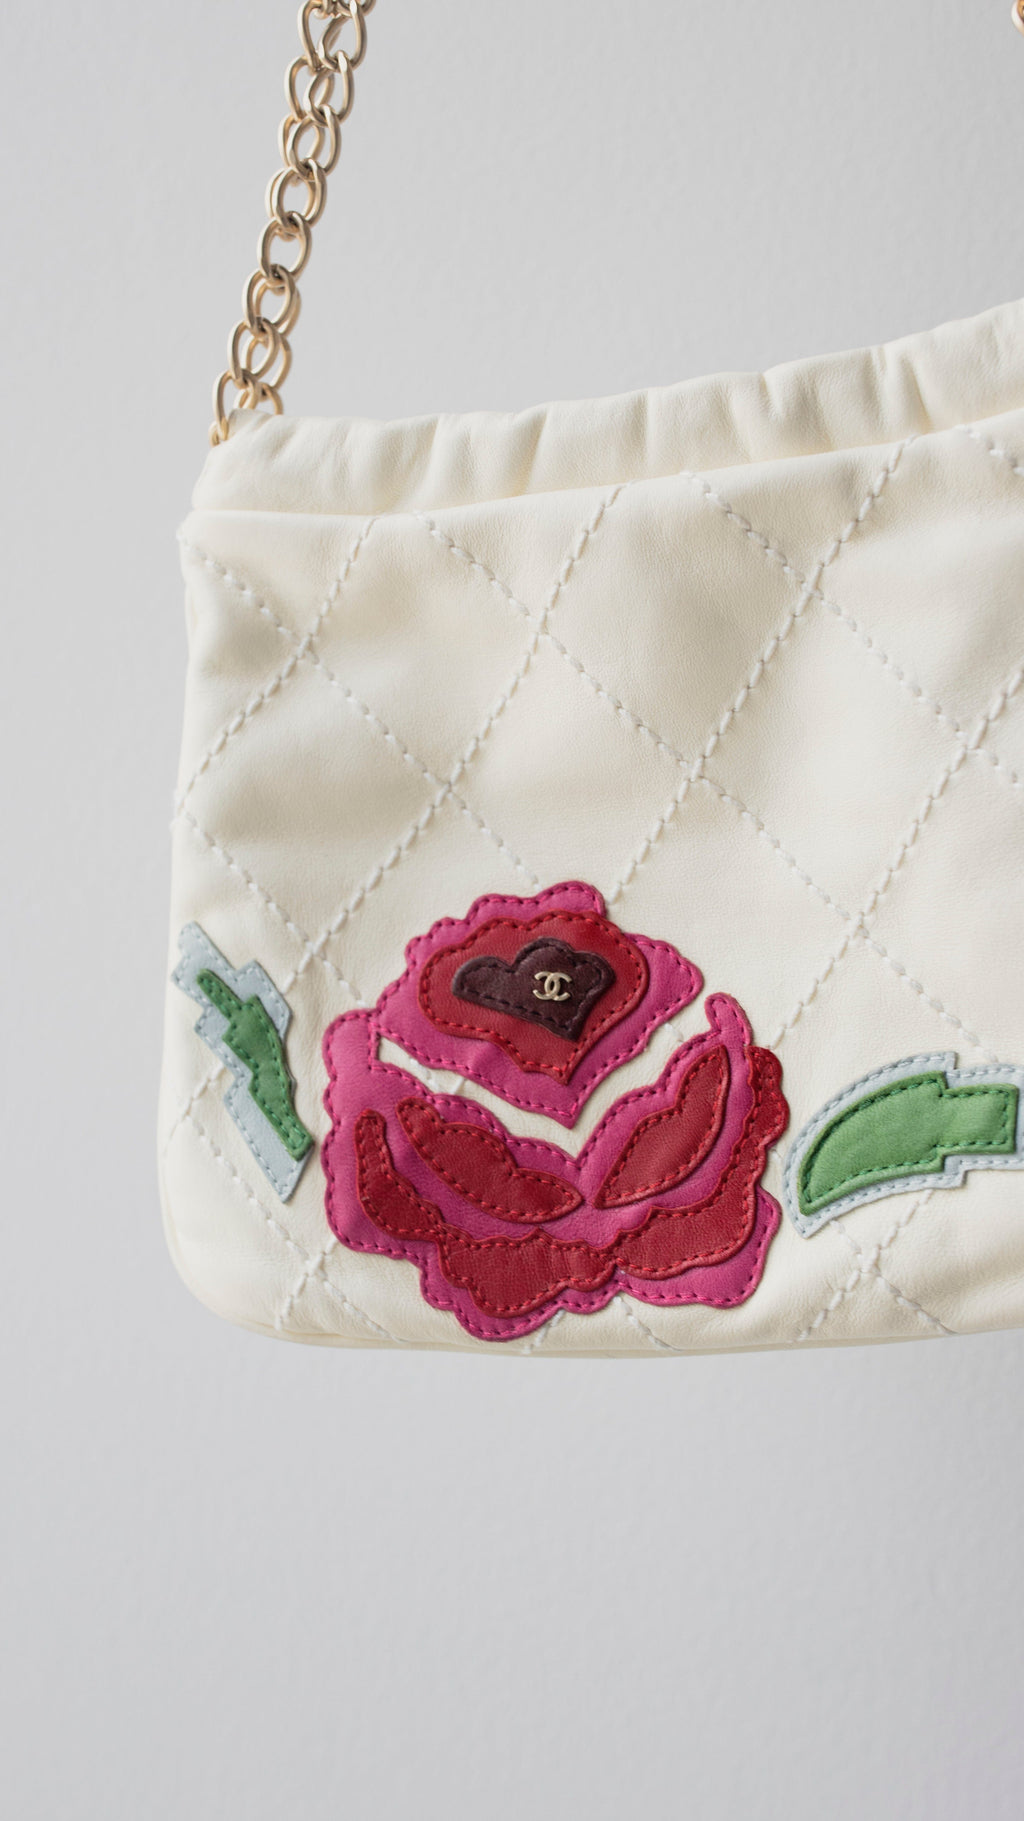 Chanel Rose Red & White Patterned Bag